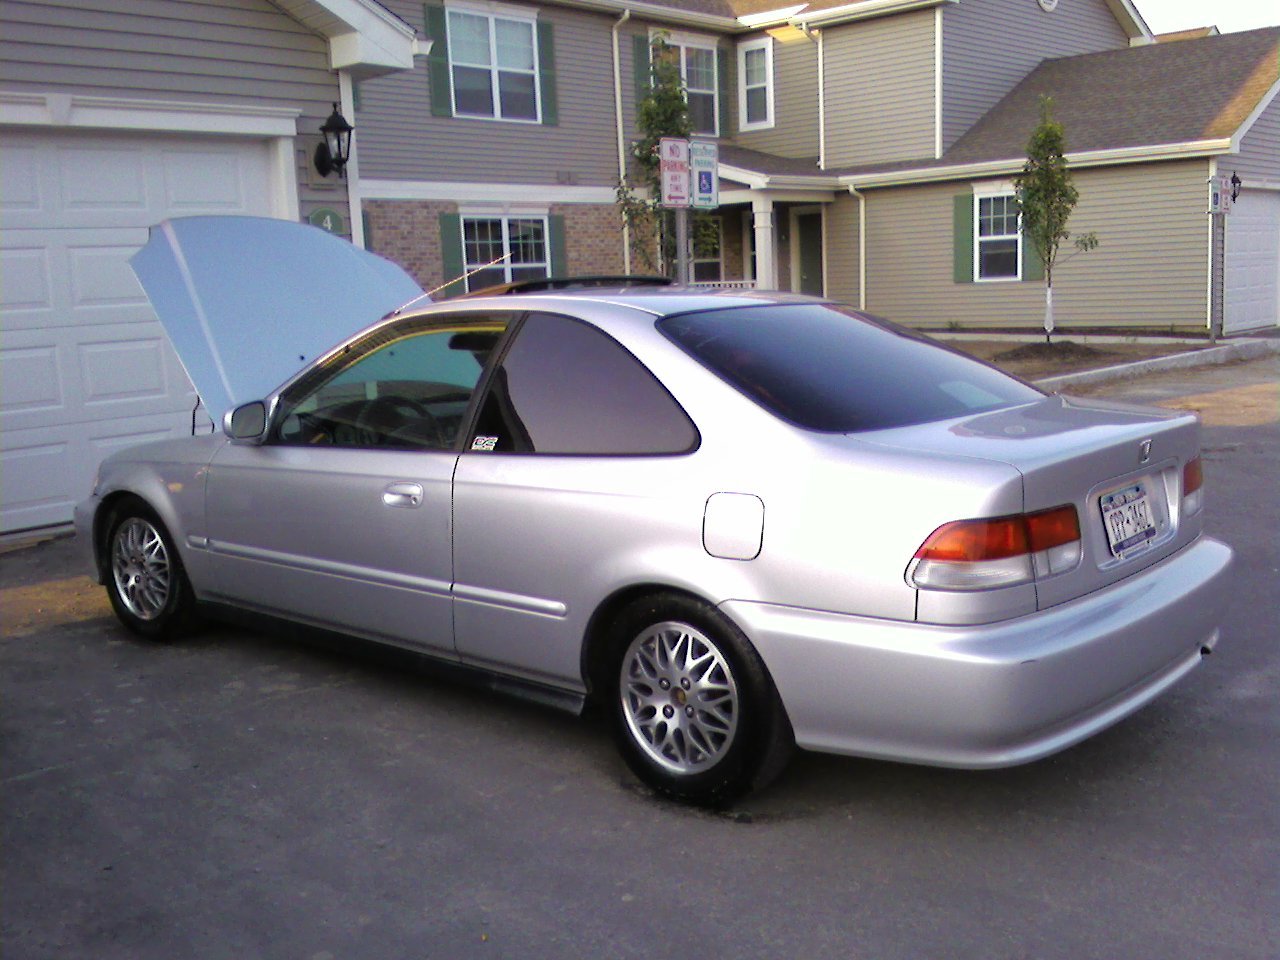 Honda civic 1999. Хонда Цивик седан 1999. Honda Civic Coupe 1999. Хонда Цивик 1999 года.